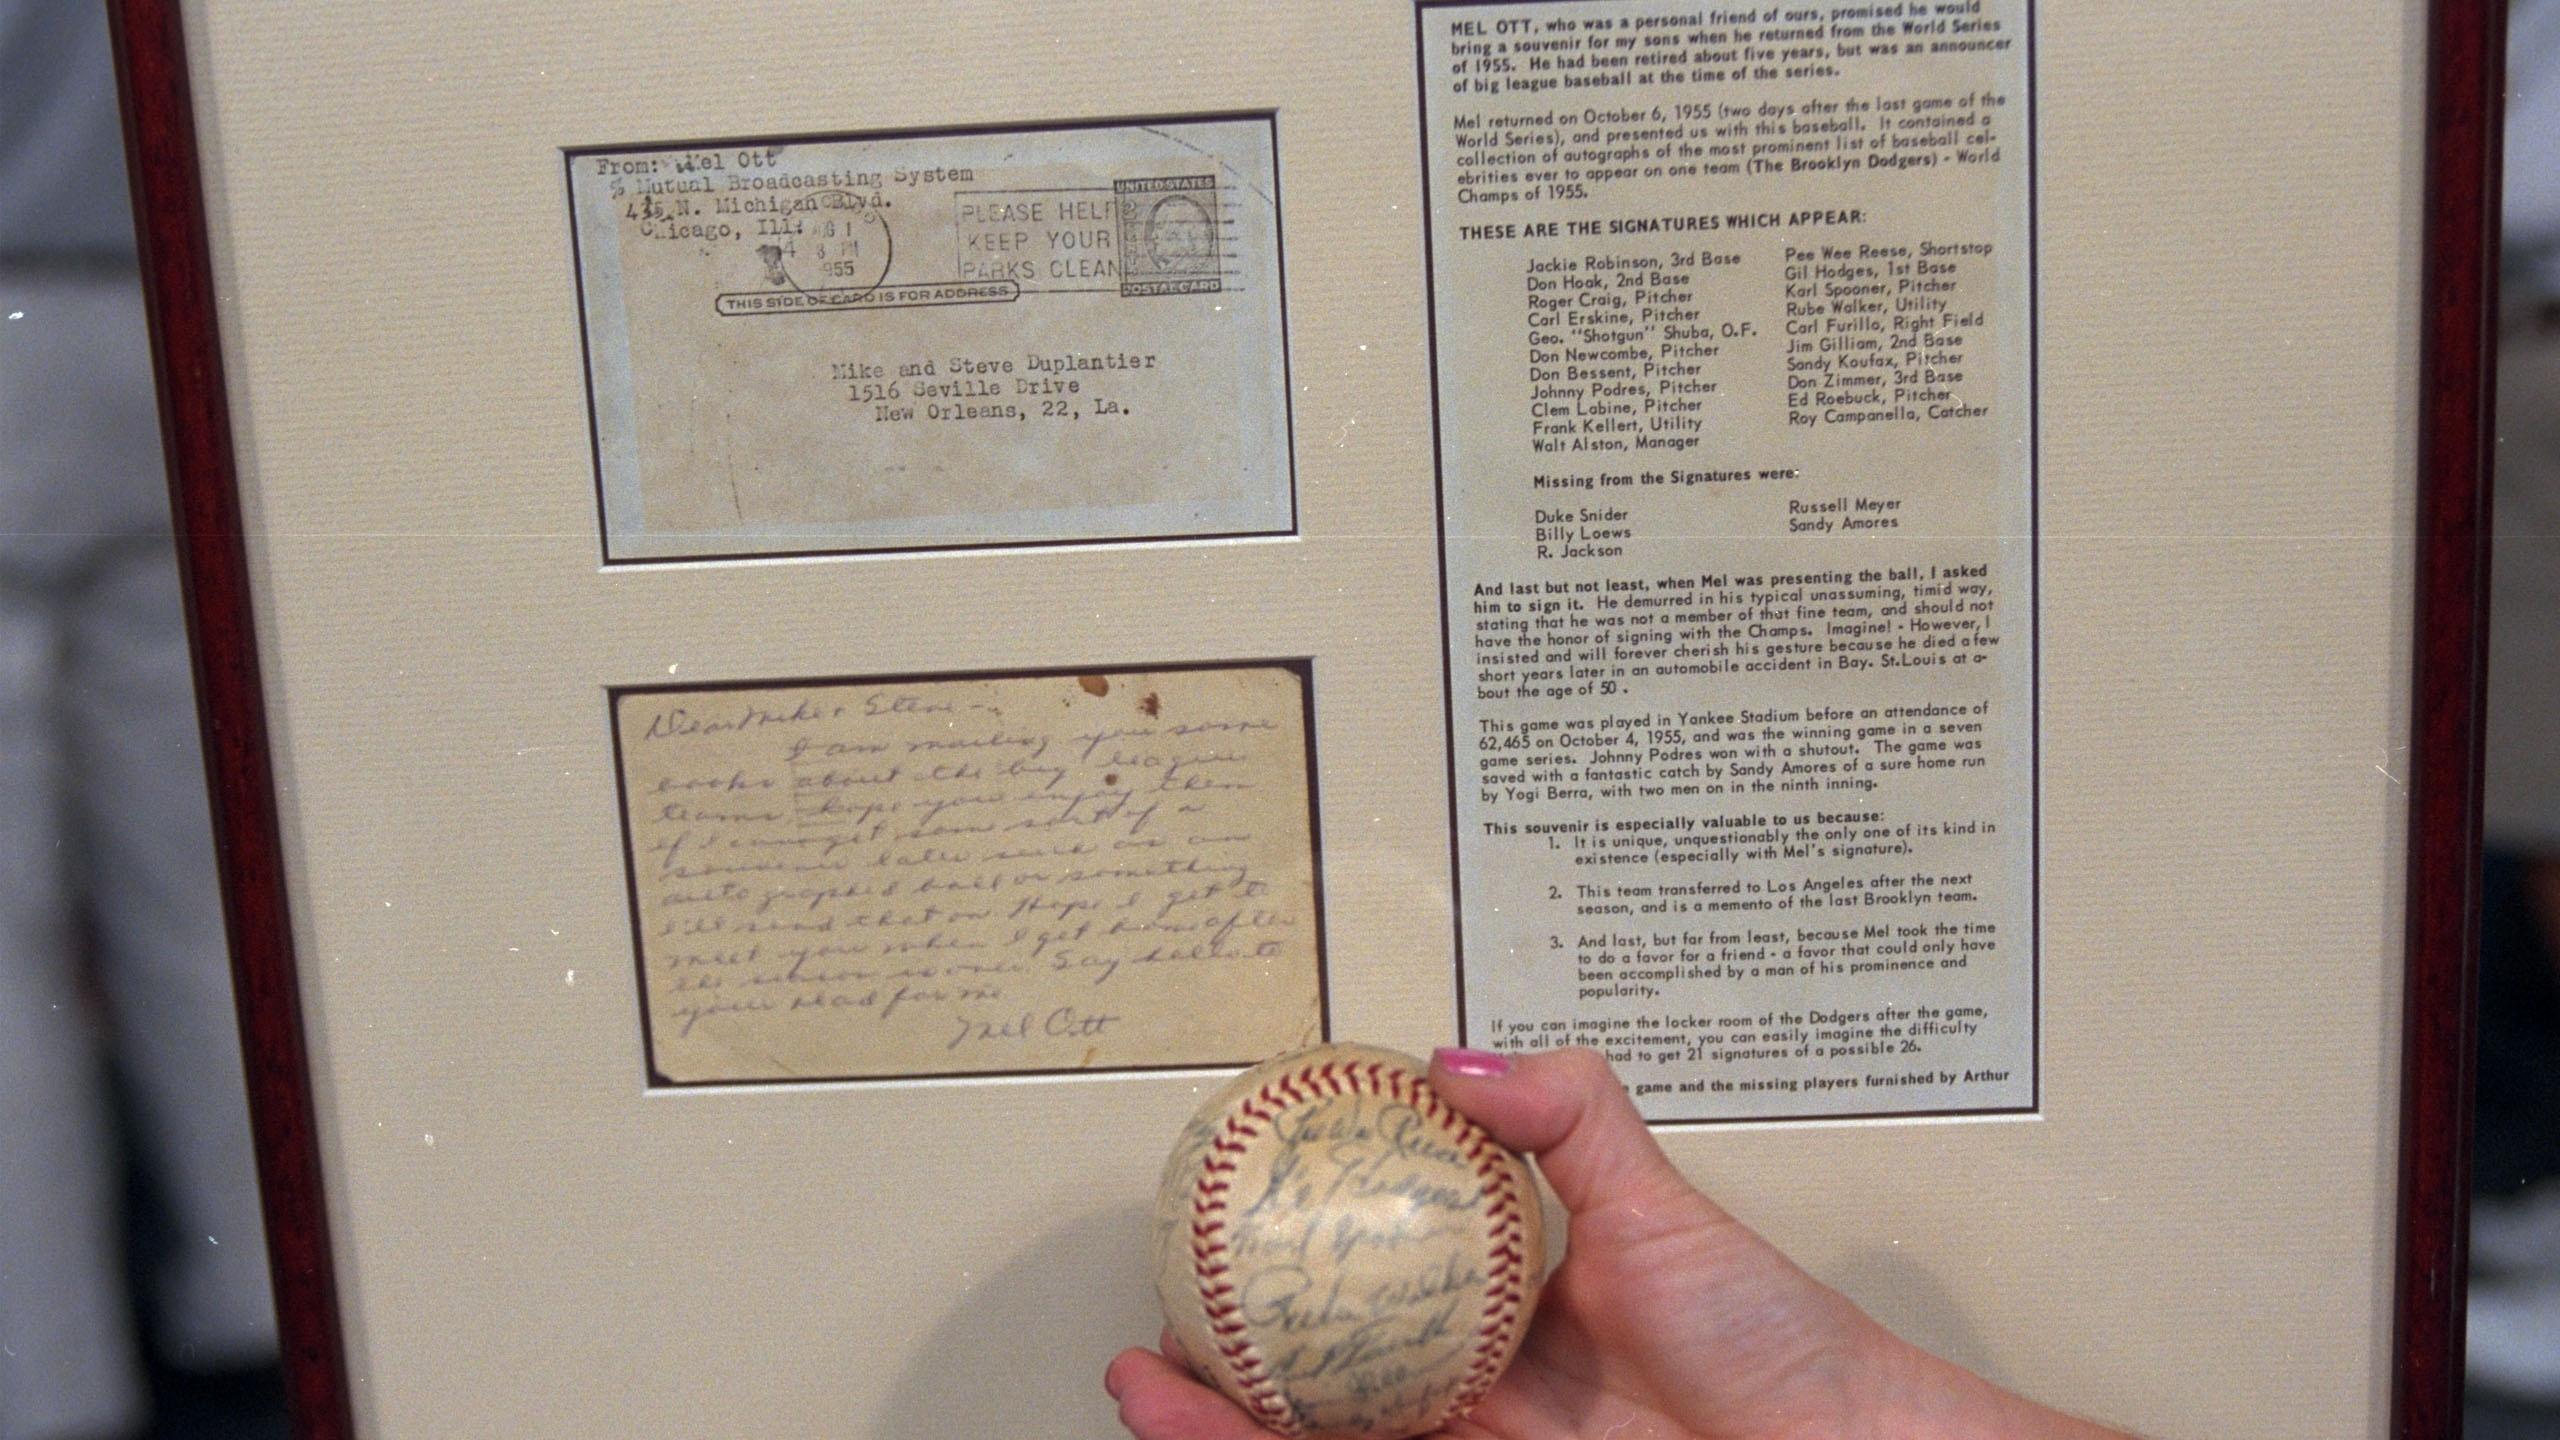 Baseball Legends: The 1955 Brooklyn Dodgers